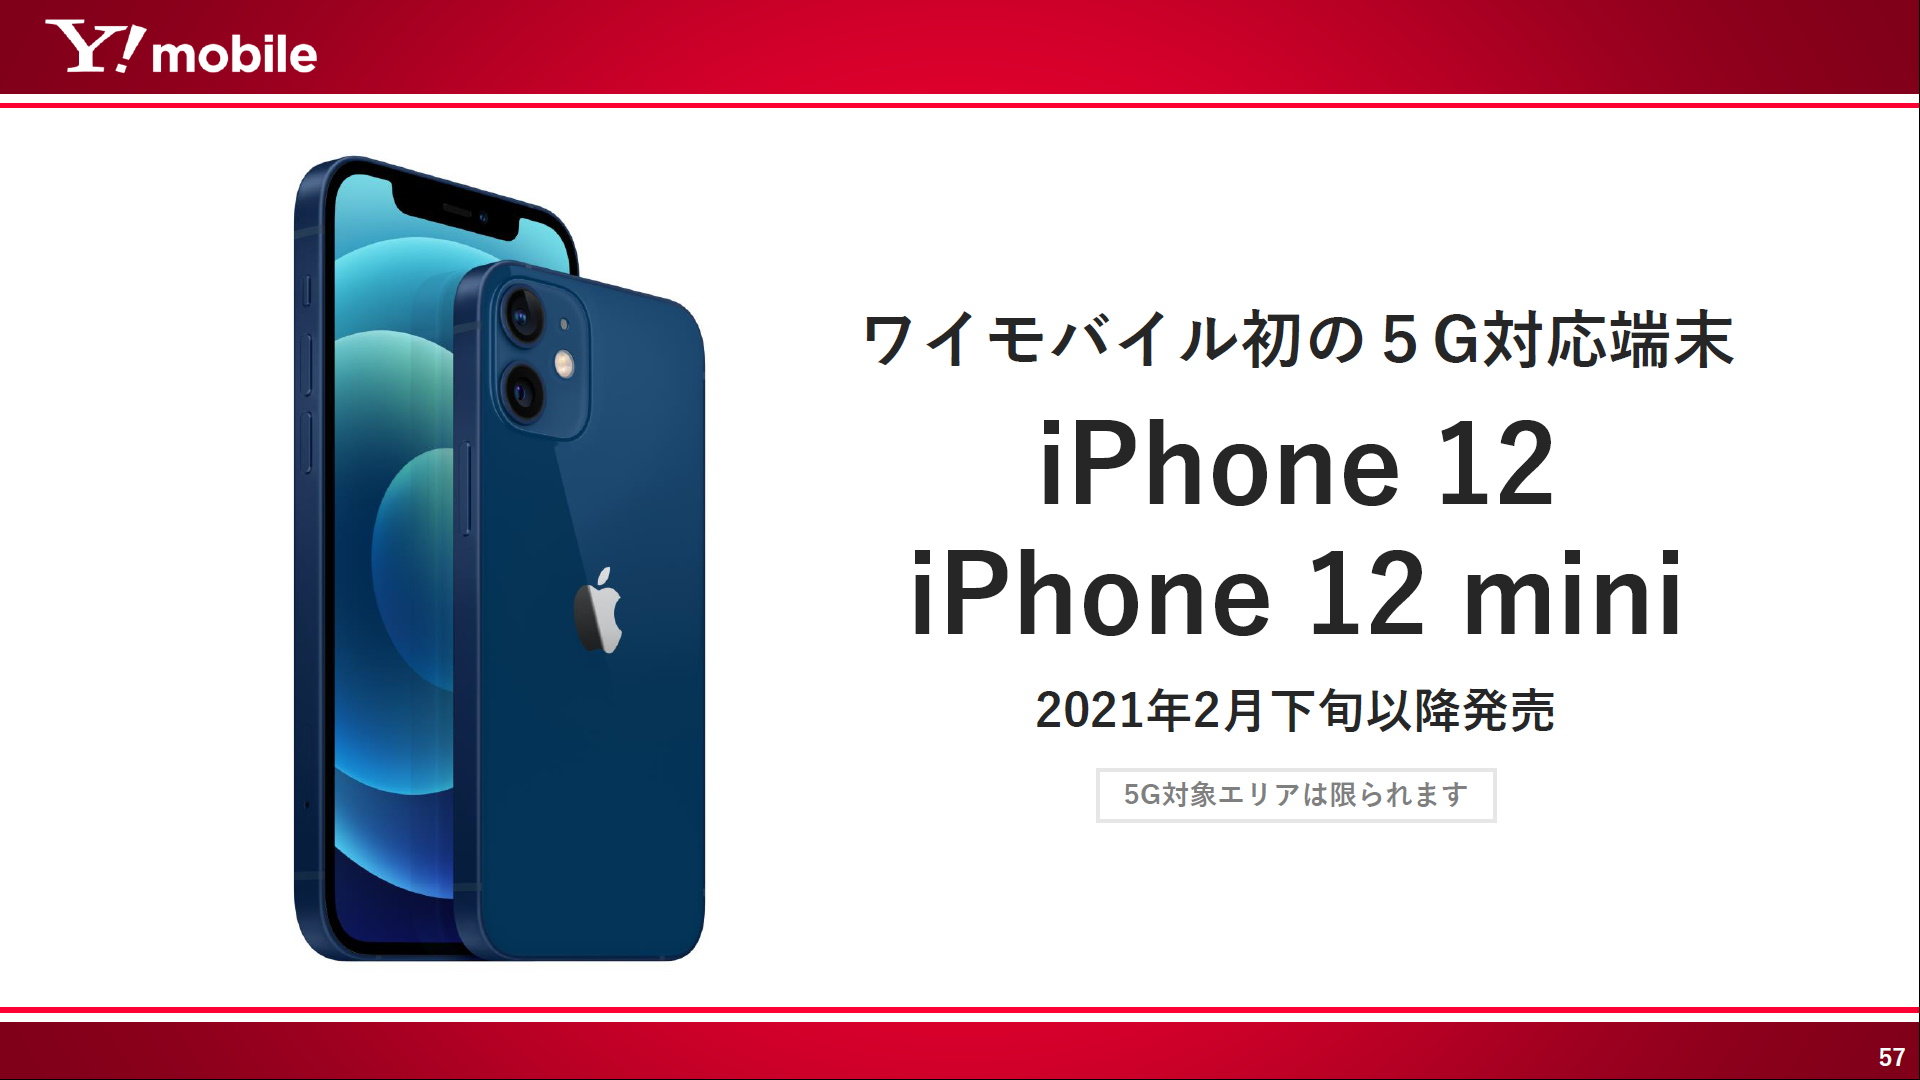 iPhone 12 mini ブルー 128 GB Y!mobile-